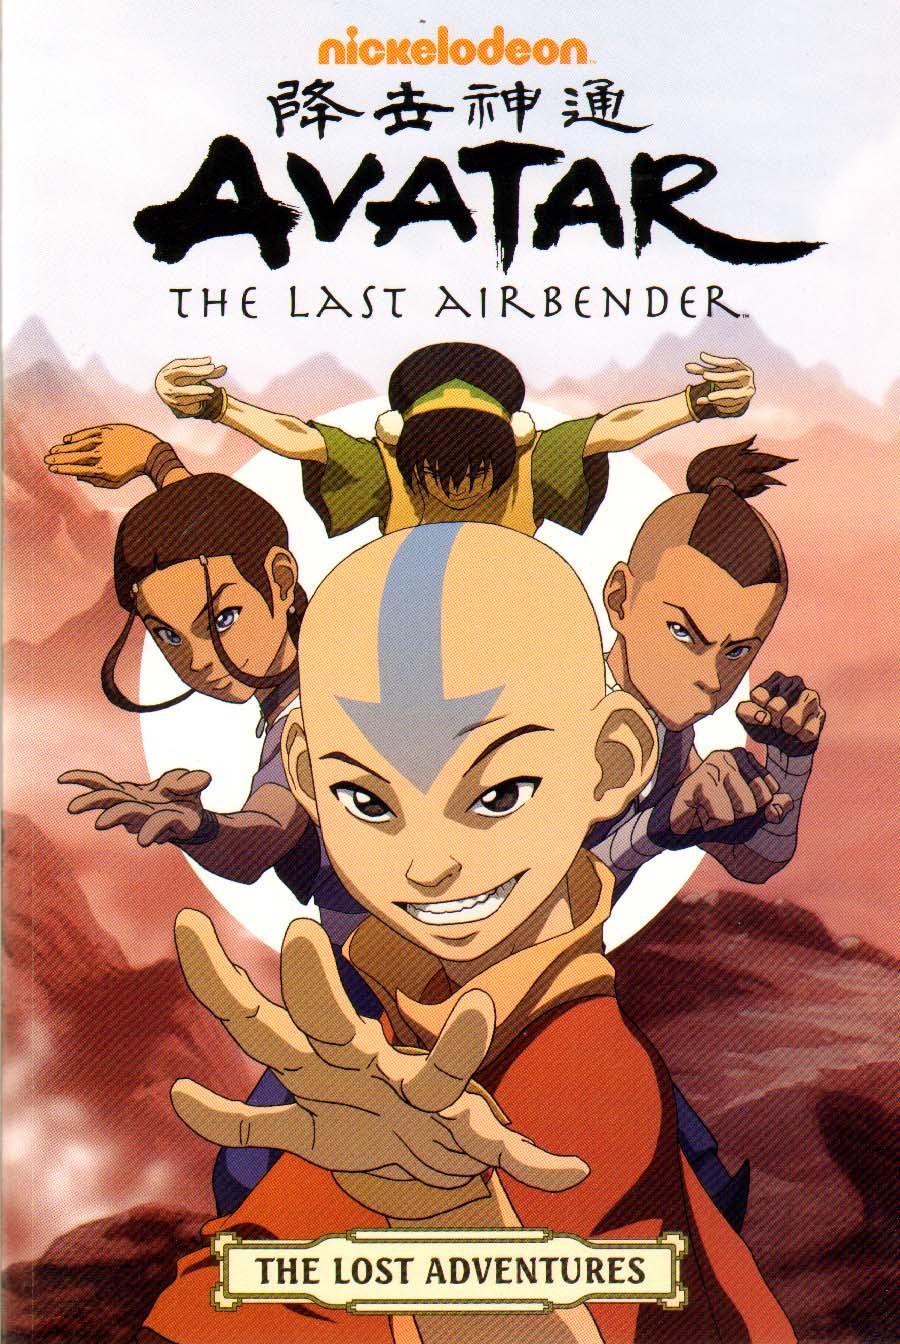 Avatar: The Last Airbender# The Lost Adventures - Aaron Ehasz